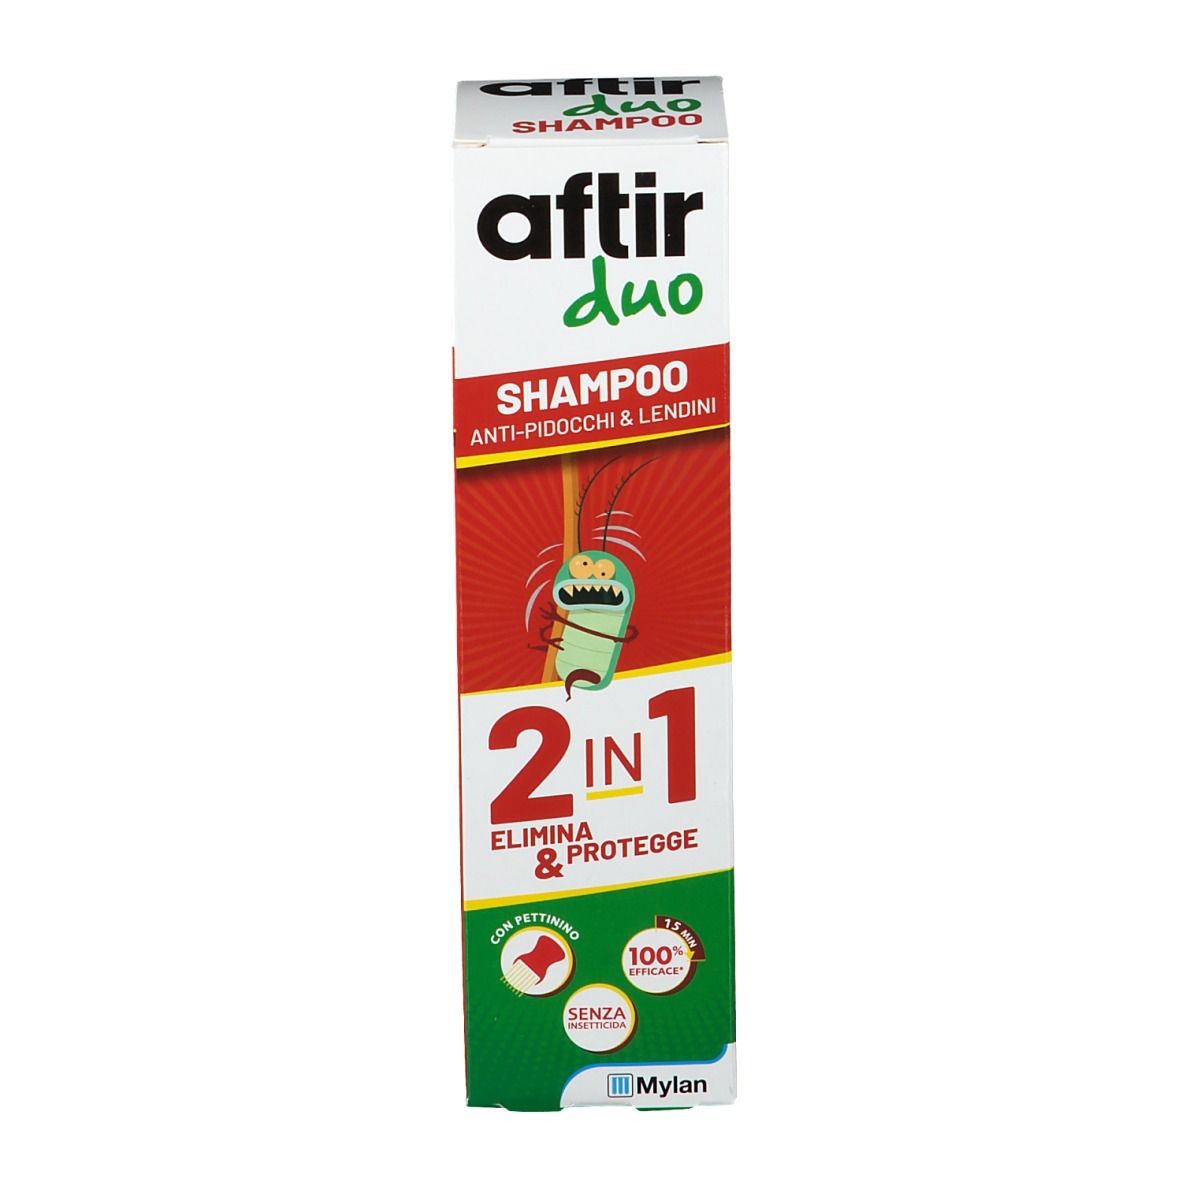 Aftir Duo Shampoo Anti-Pidocchi